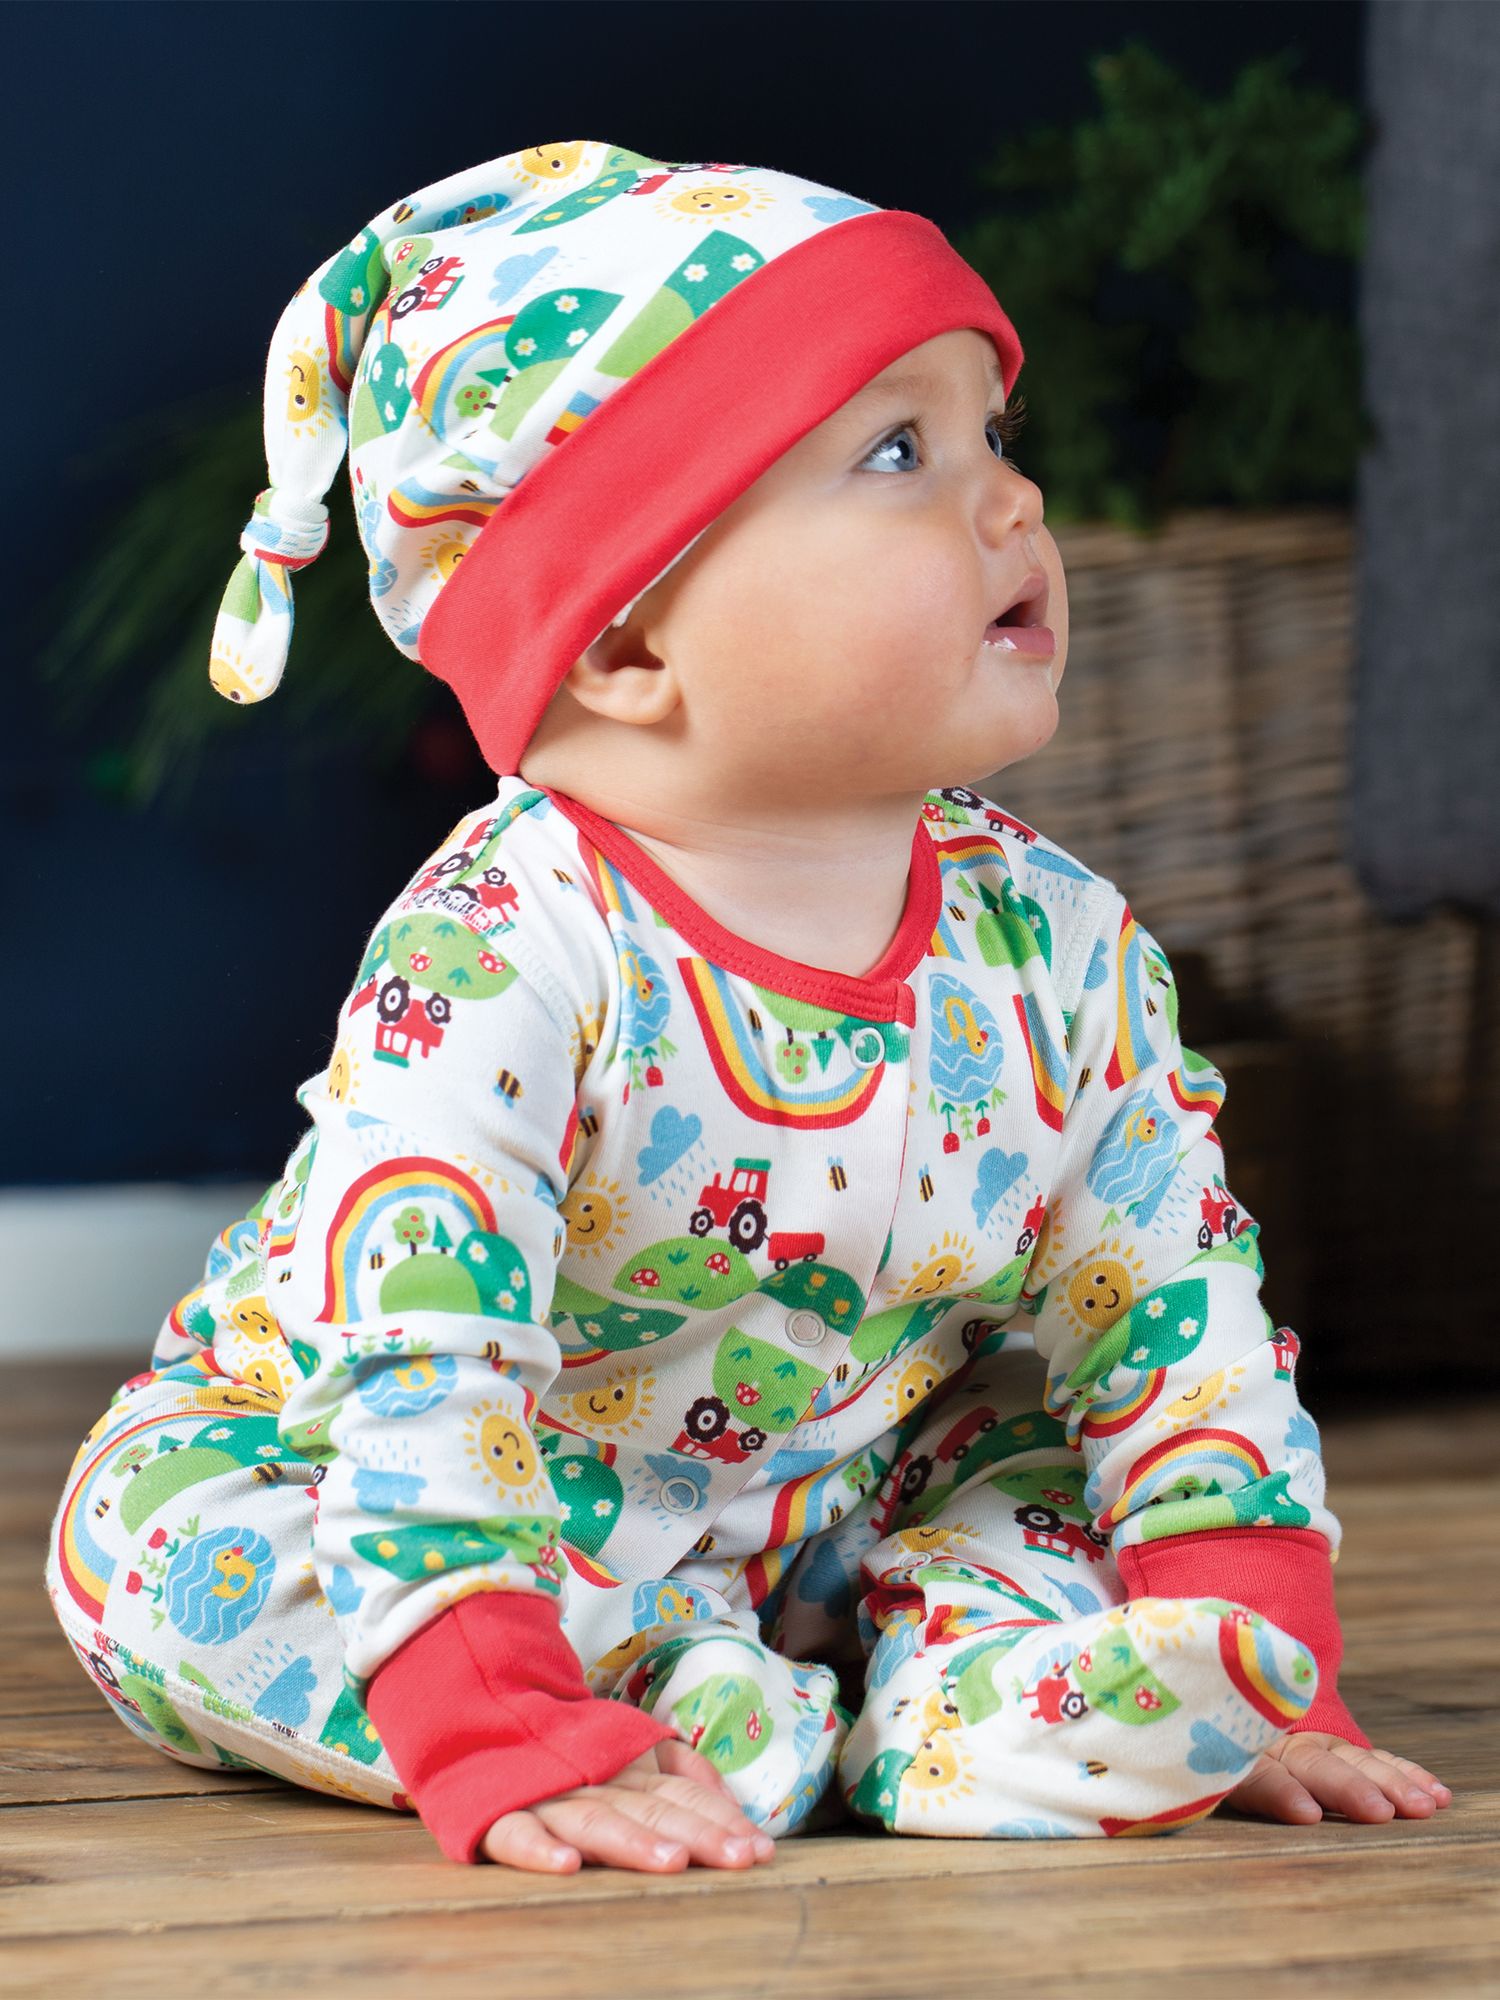 Buy Frugi Baby Happy Days Organic Cotton Sleepsuit, Bodysuit & Hat Gift Set, Multi Online at johnlewis.com